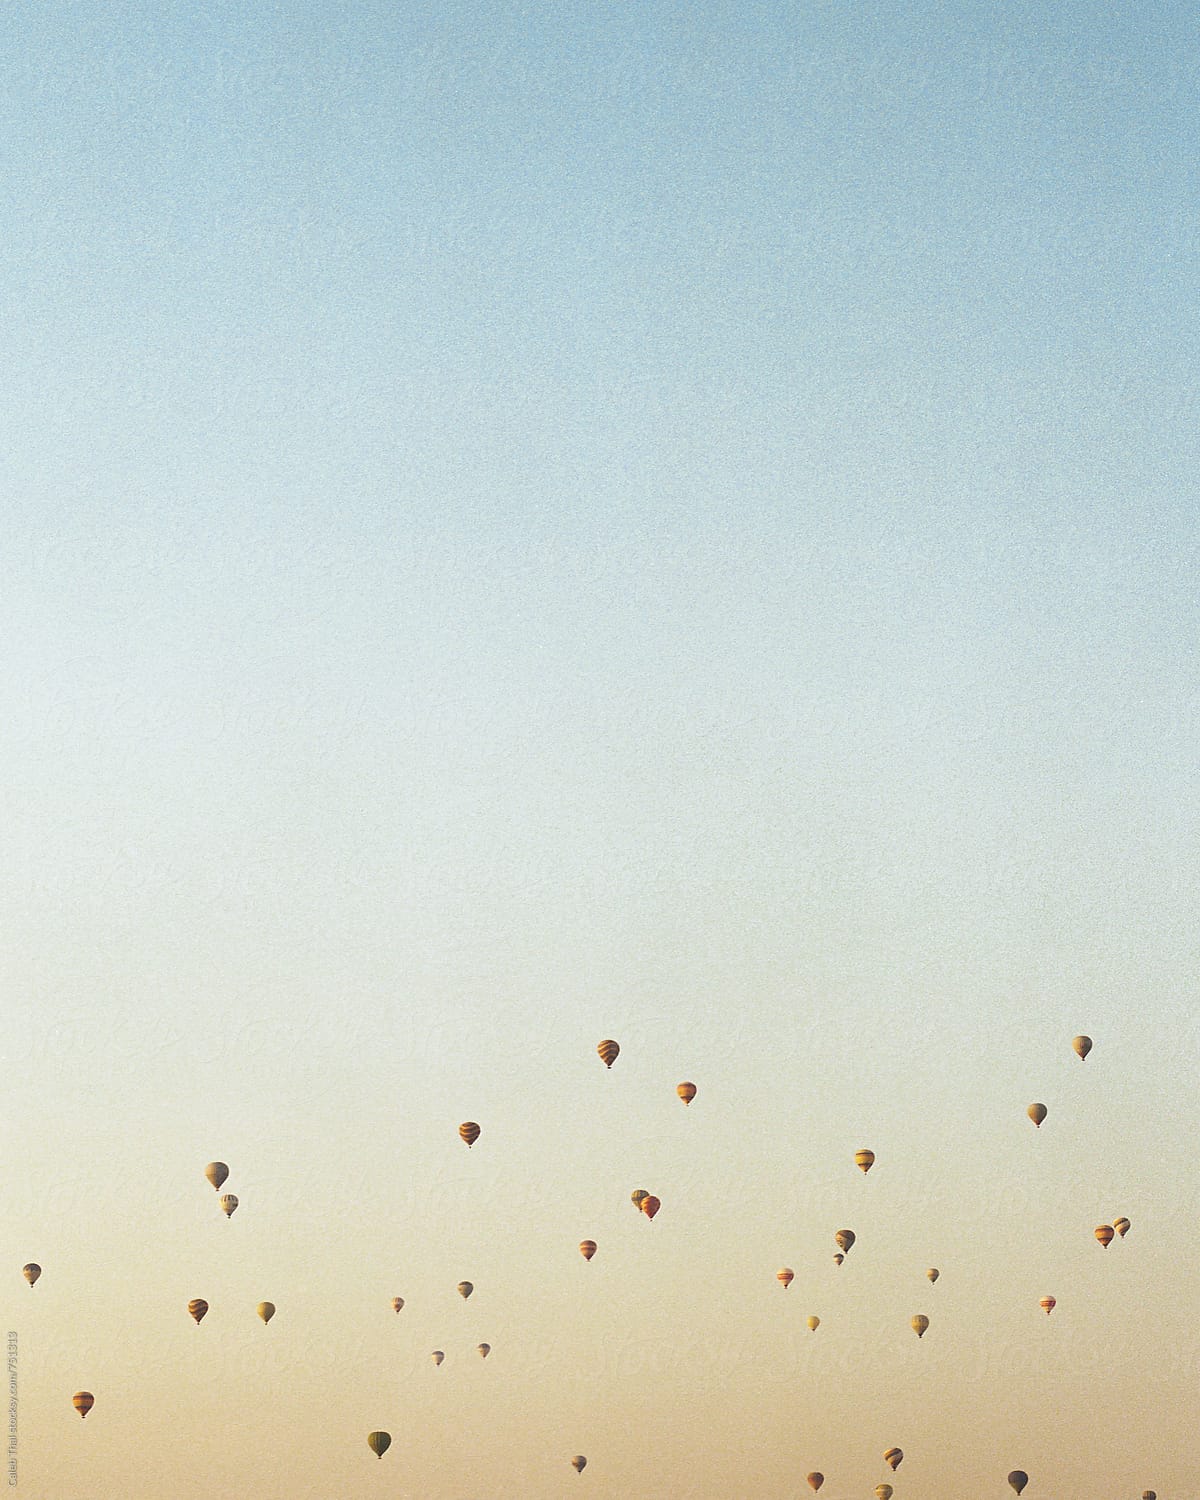 Sky of Hot Air Balloons